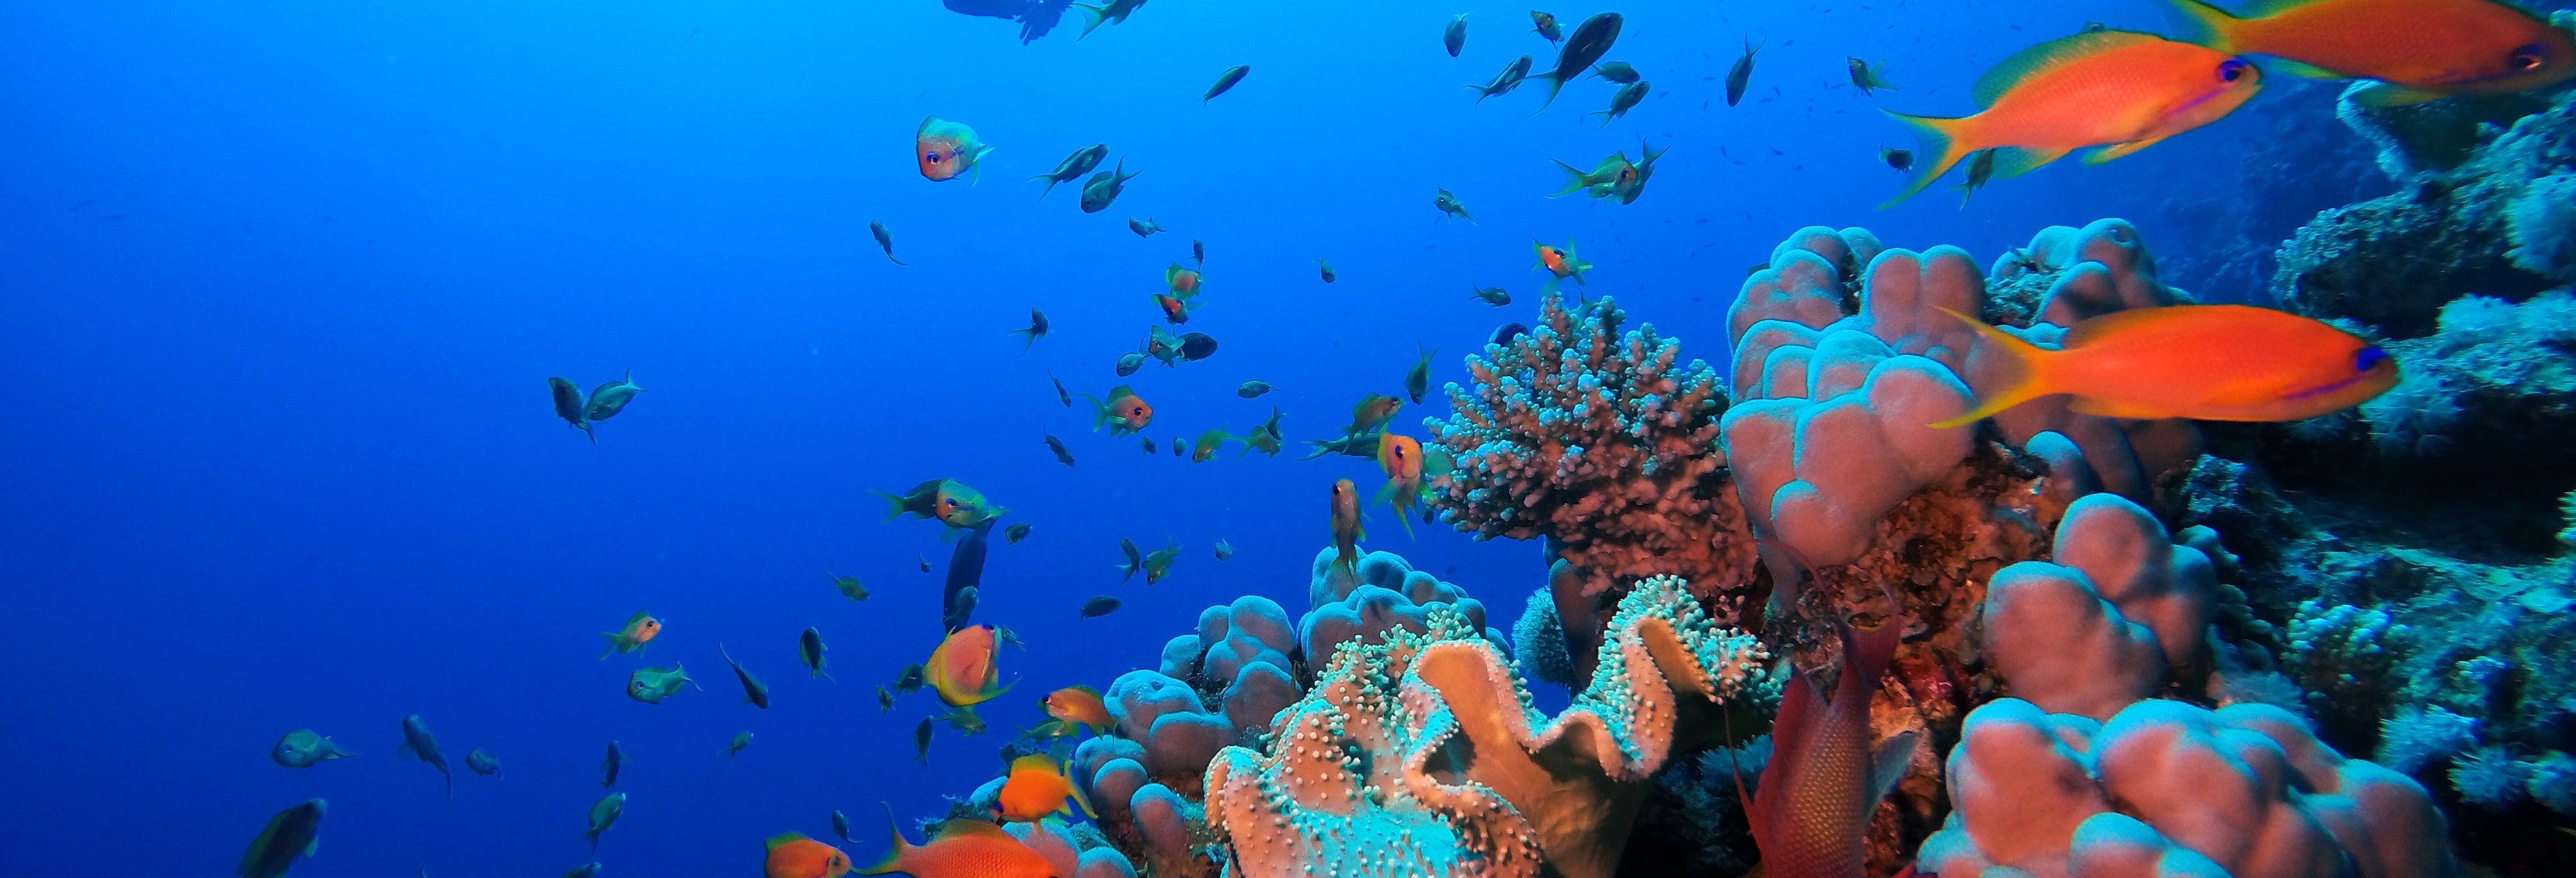 Red Sea Beginners Scuba Diving